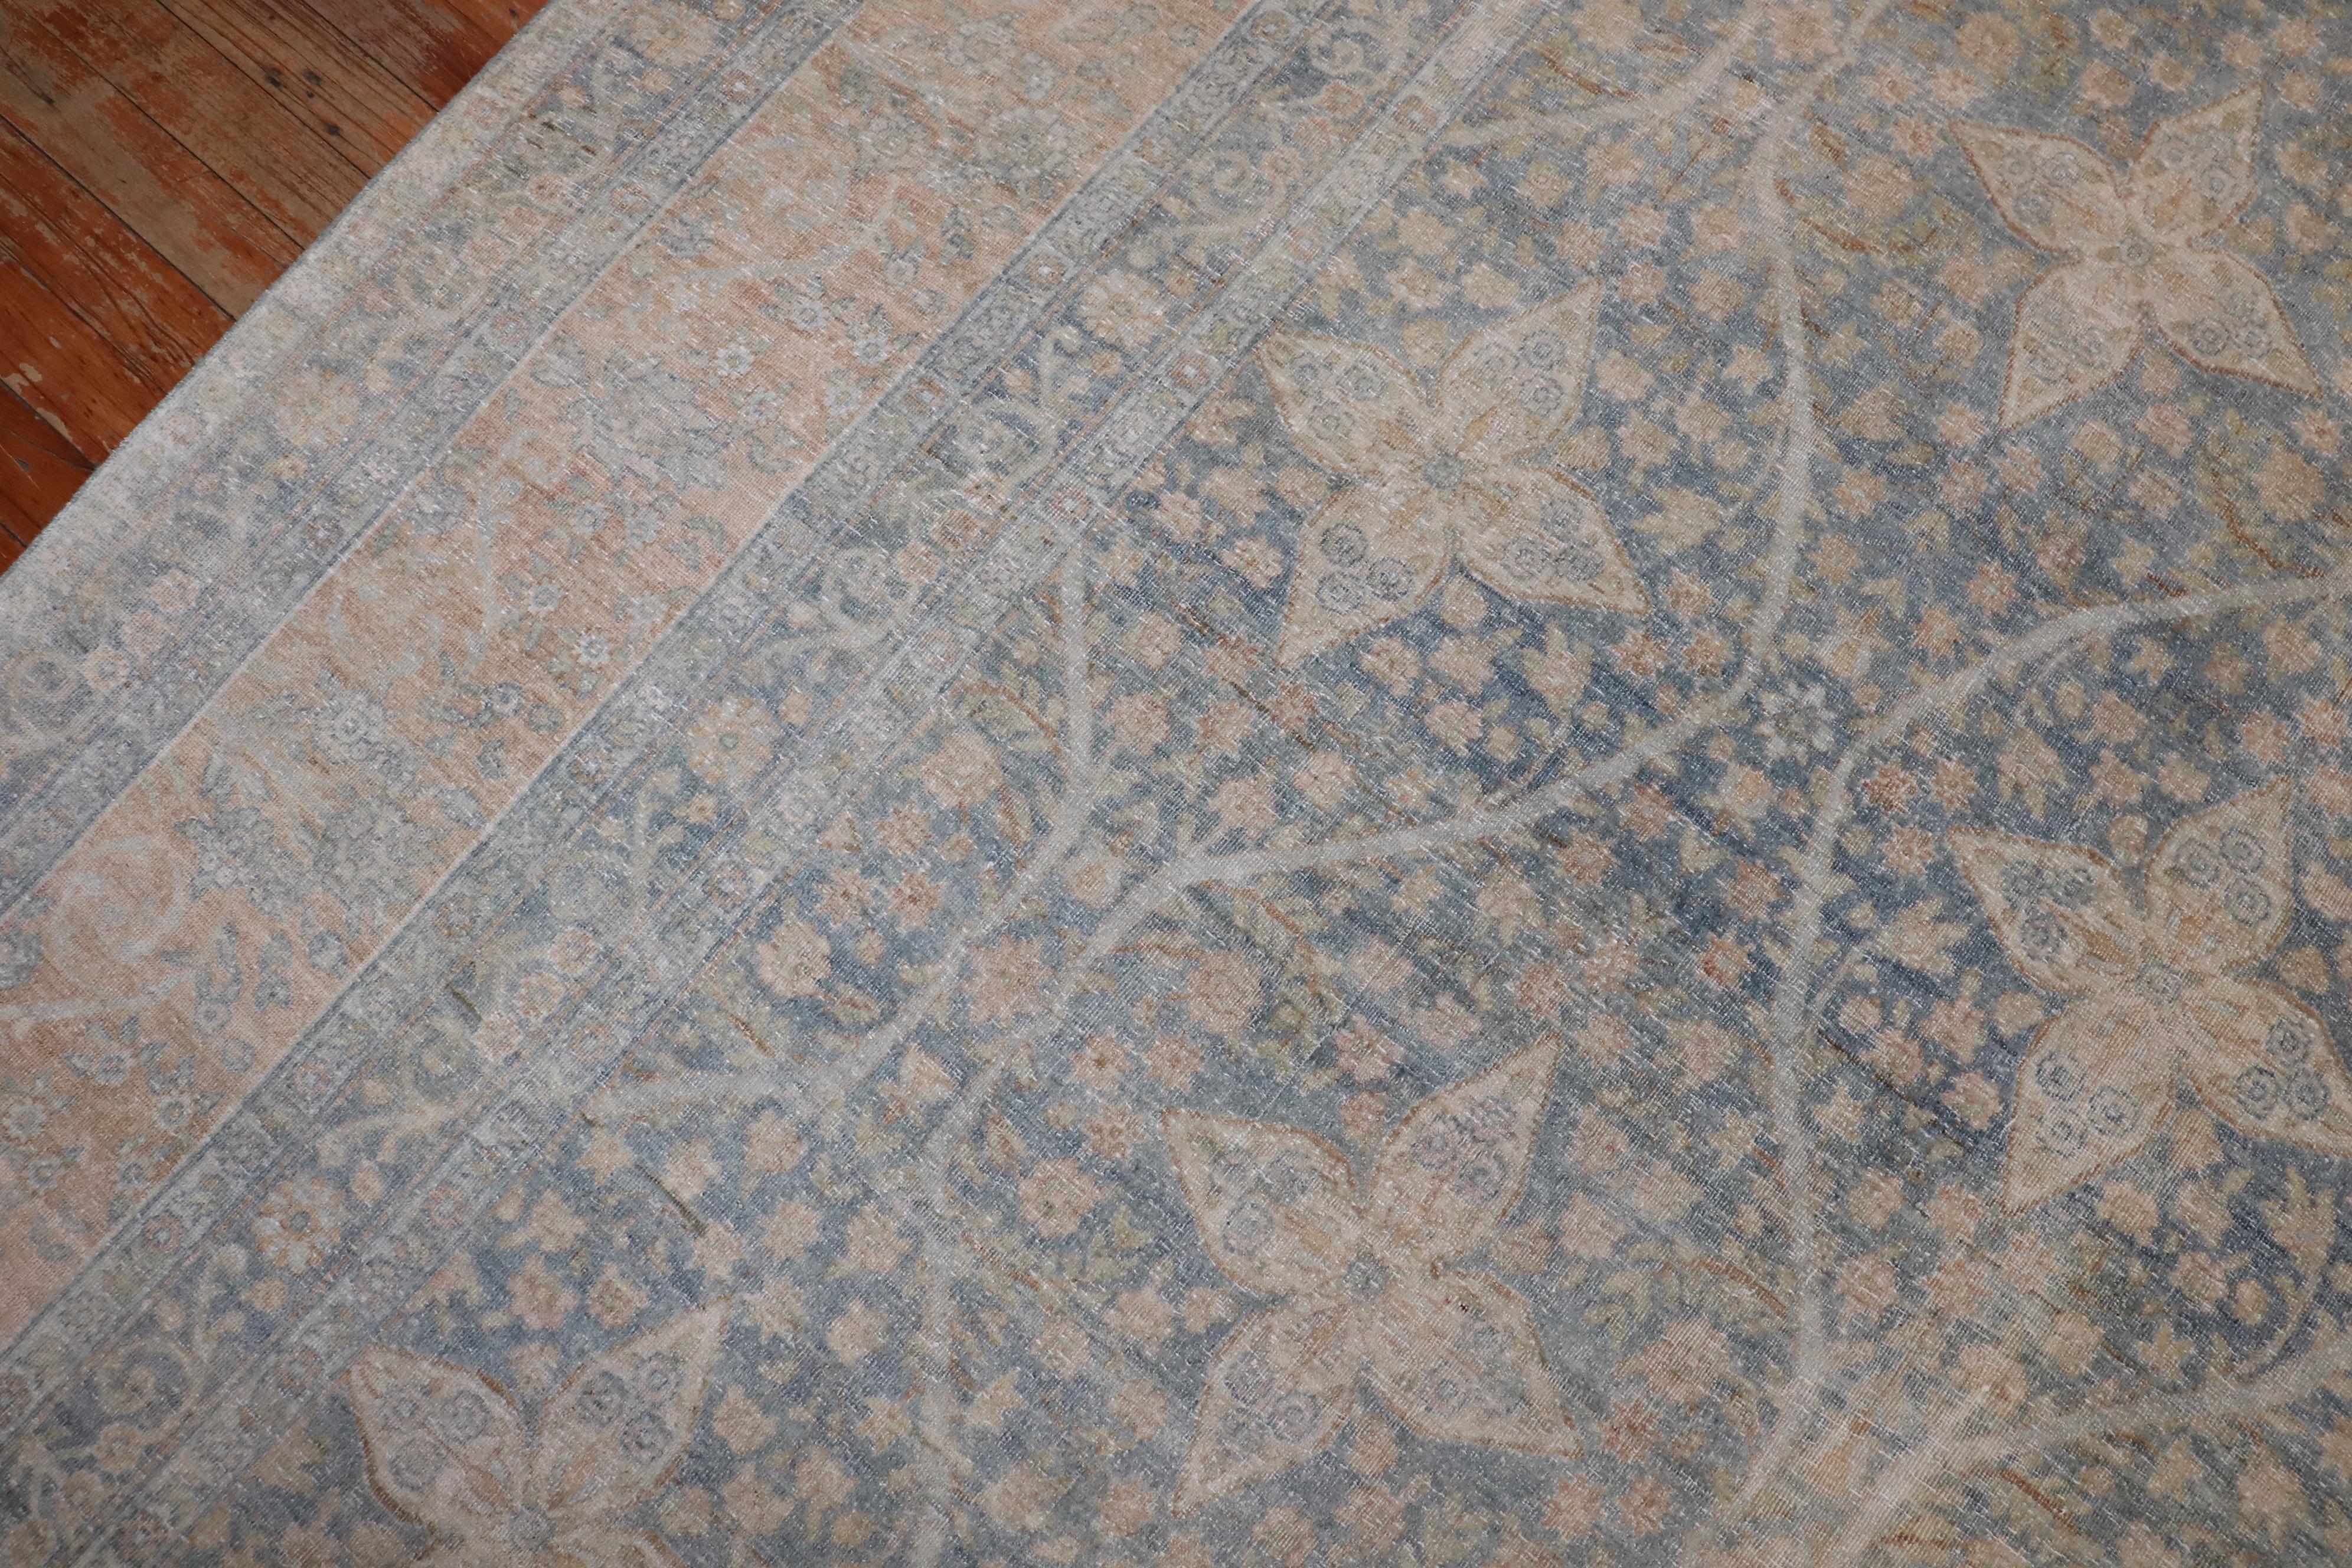 Zabihi Collection Exquisite Oversize Antique Persian Kerman Carpet  For Sale 5